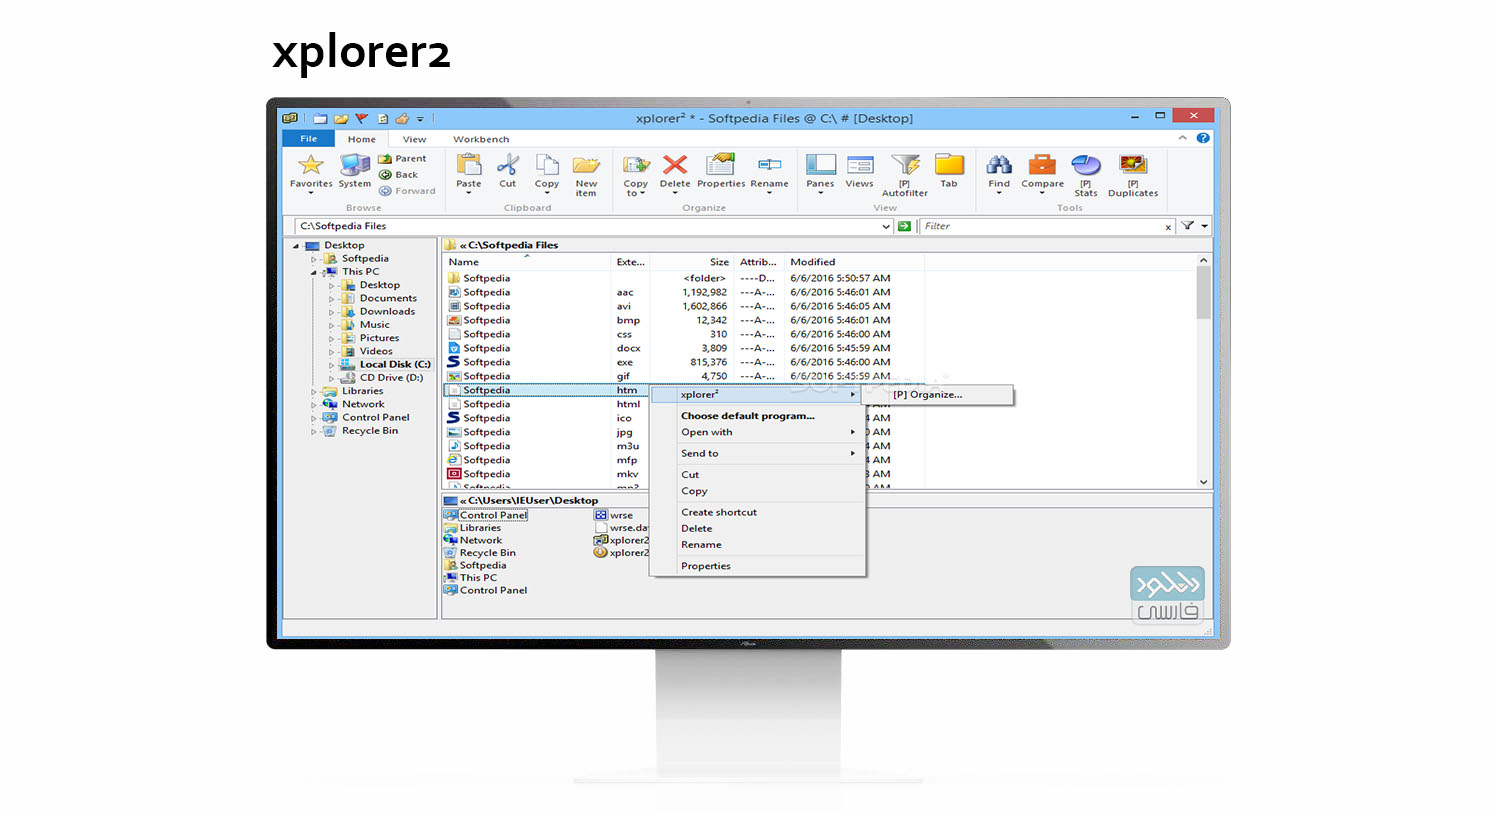 Xplorer2 Ultimate 5.4.0.2 instal the new for apple